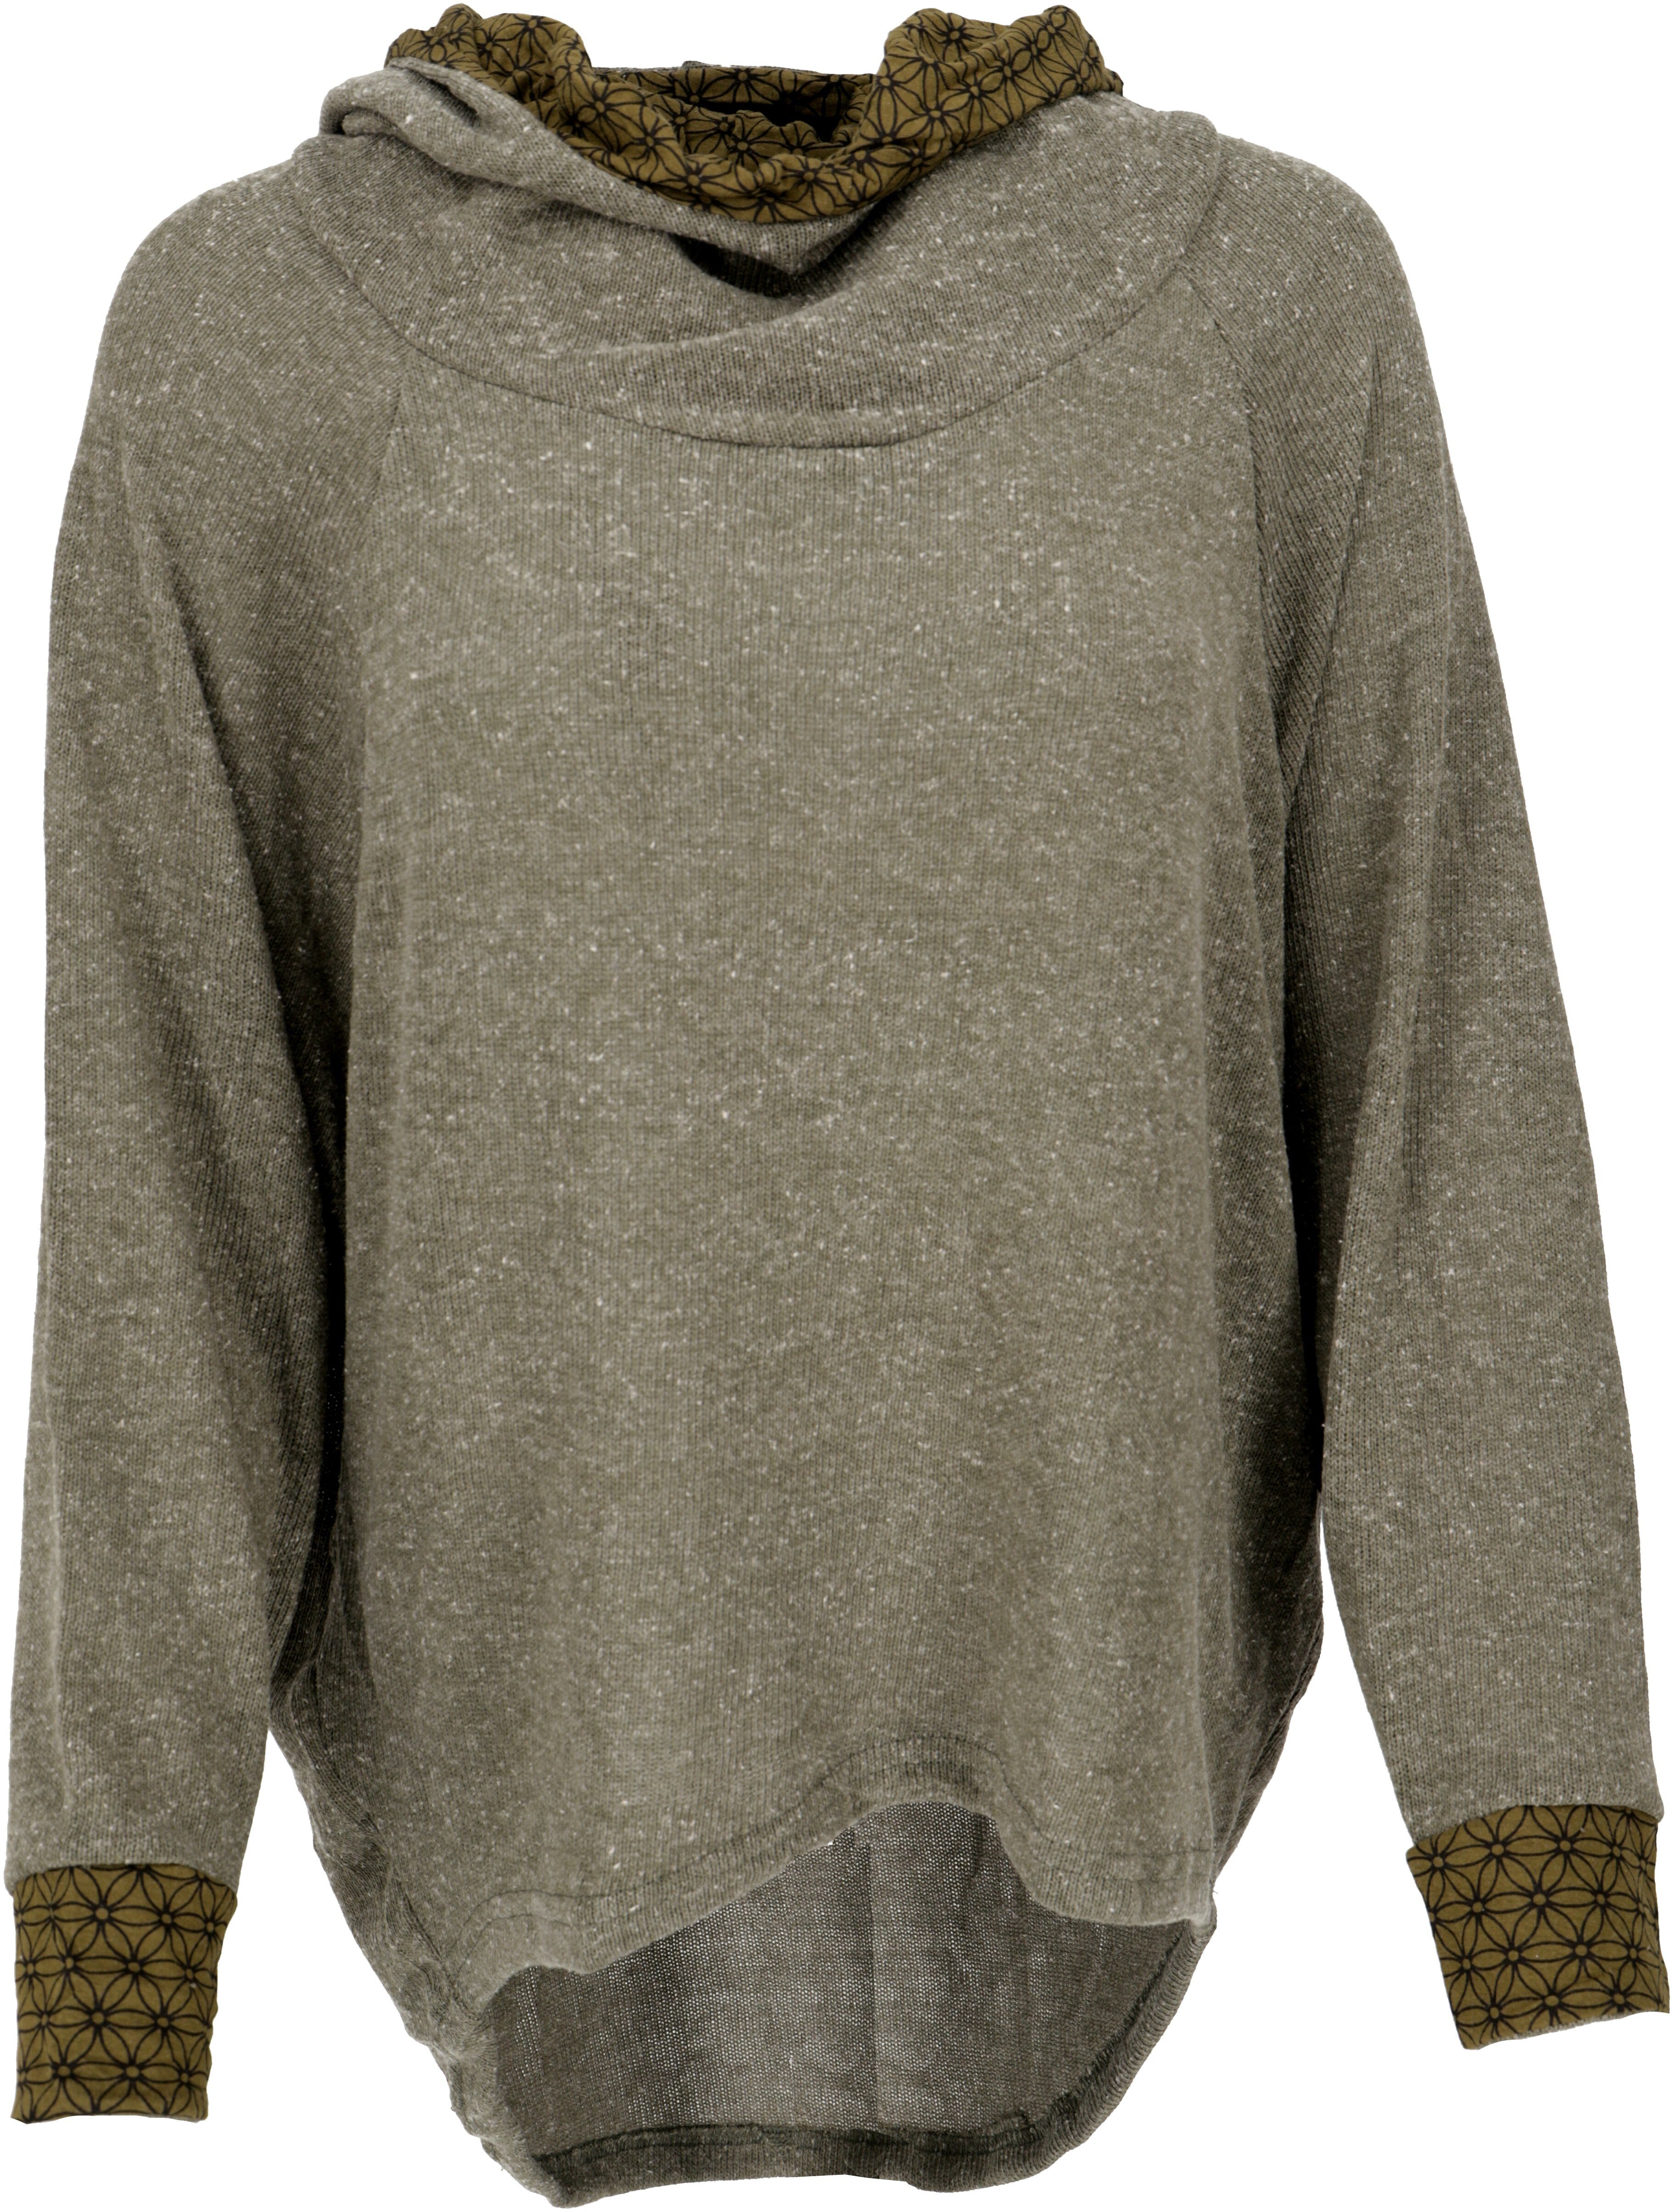 Guru-Shop Longsleeve Hoody, Sweatshirt, Pullover, Kapuzenpullover -.. alternative Bekleidung khakigrün